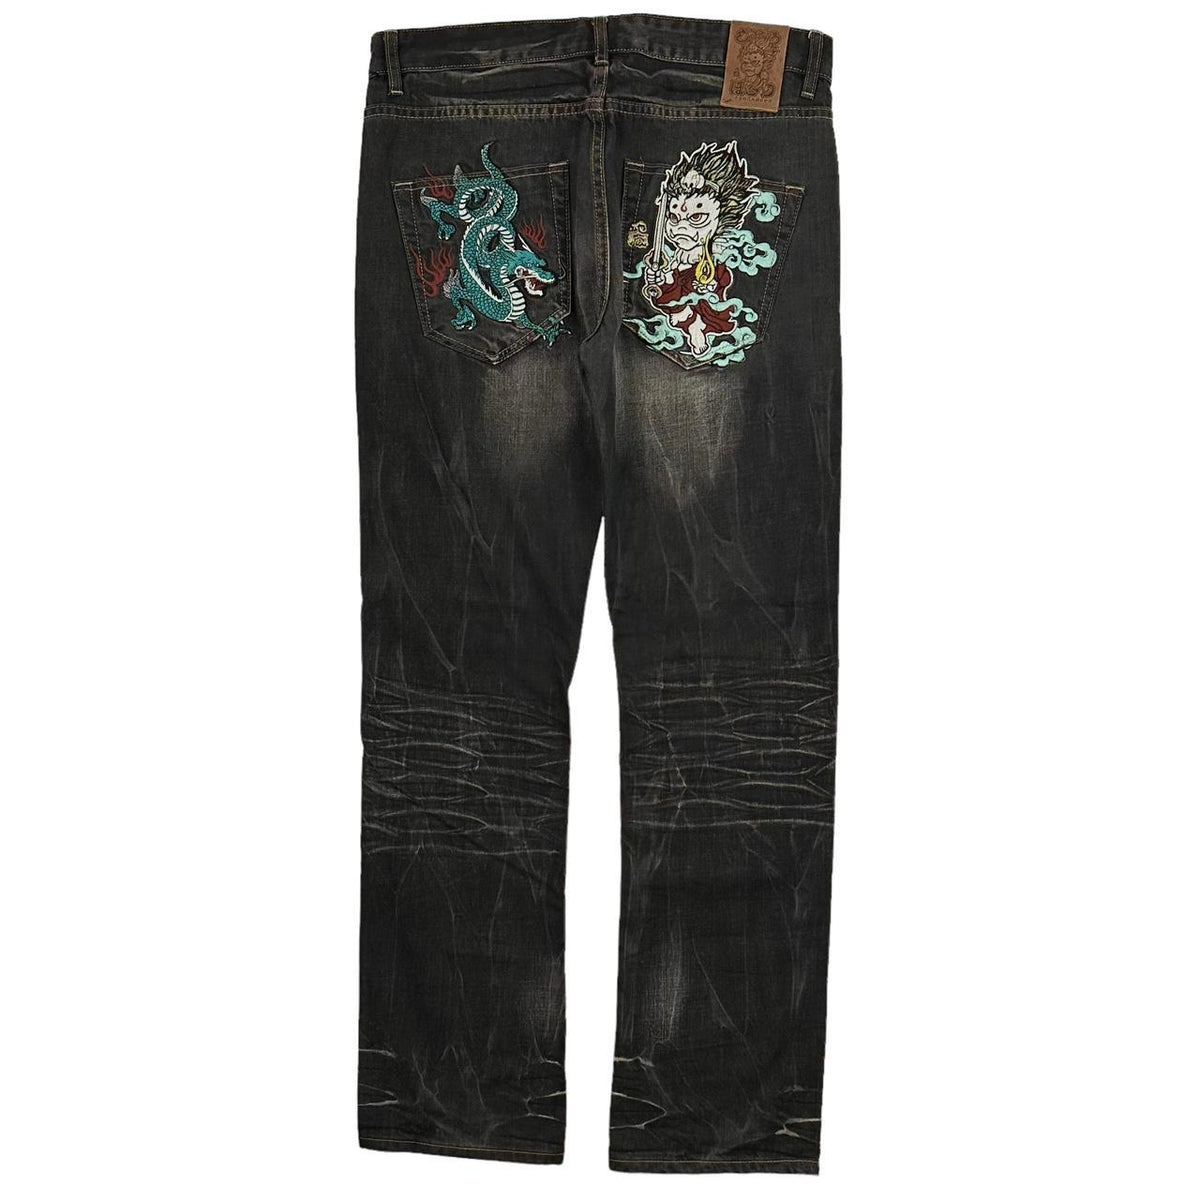 Vintage Dragon and Monster Japanese denim jeans W36